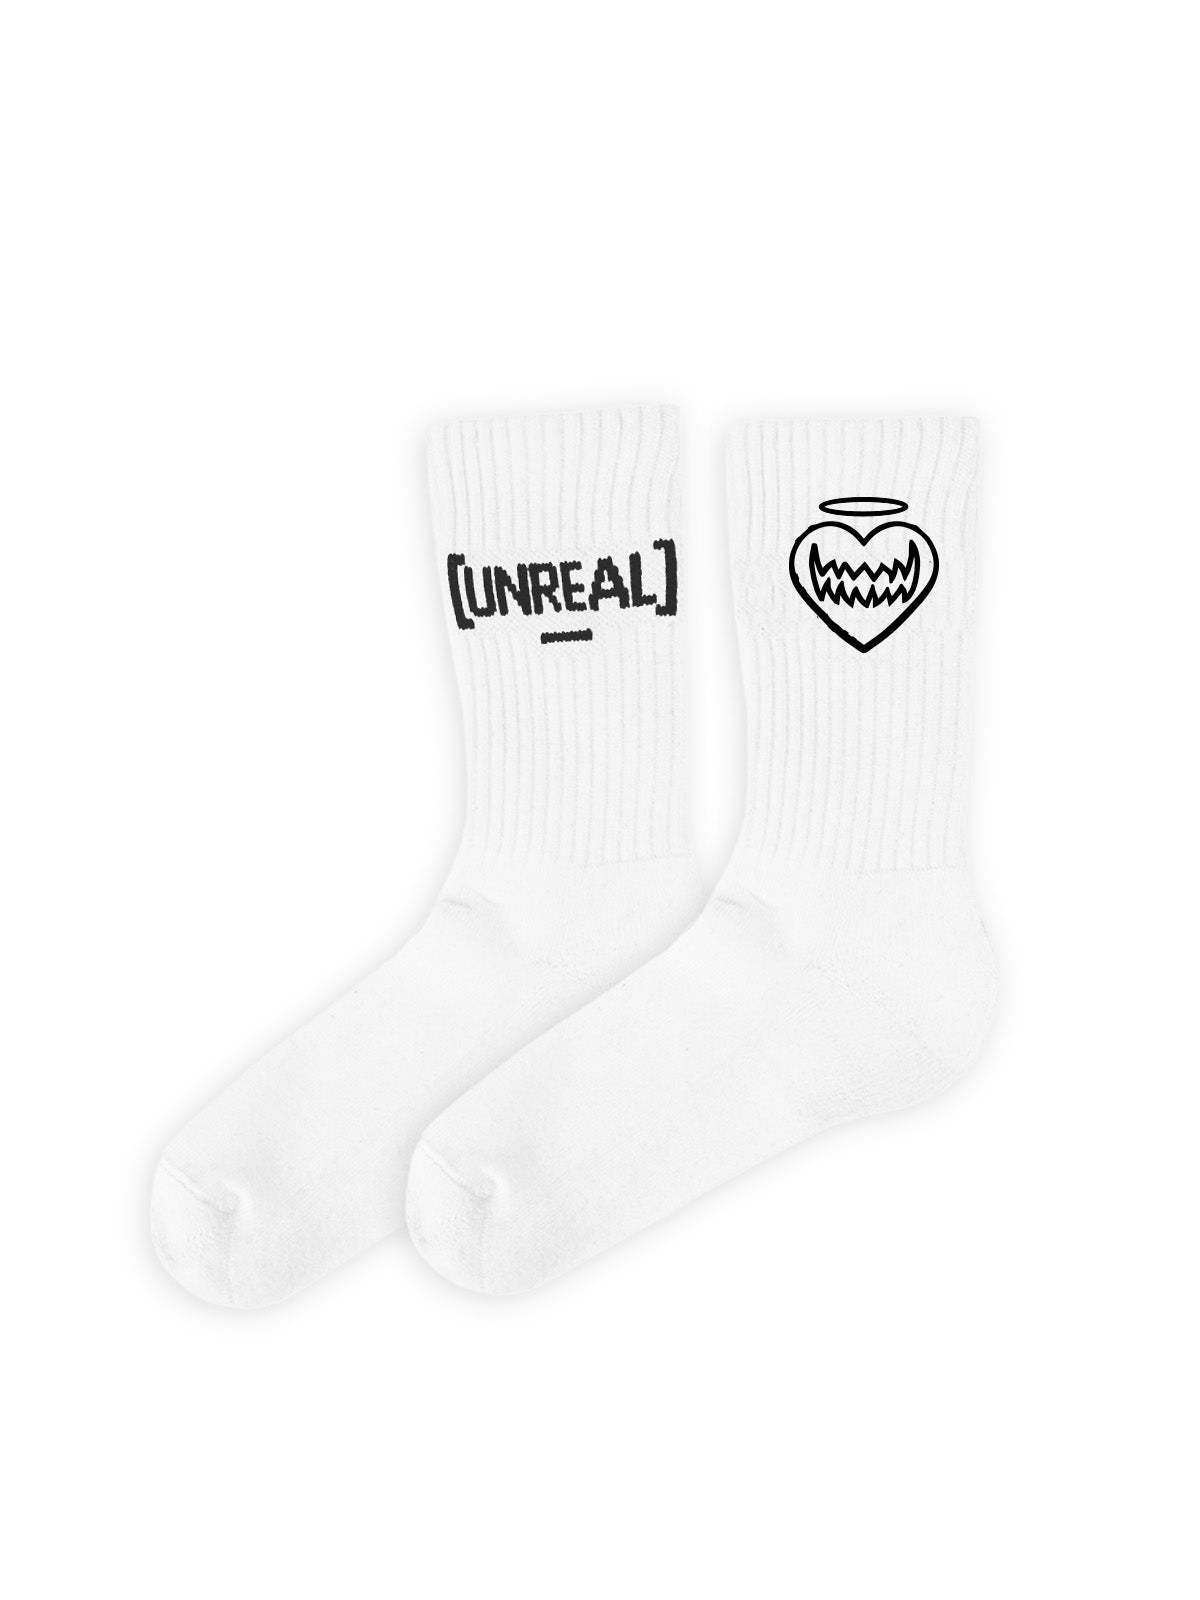 UNREAL - White/Black Bullyproof logo Socks